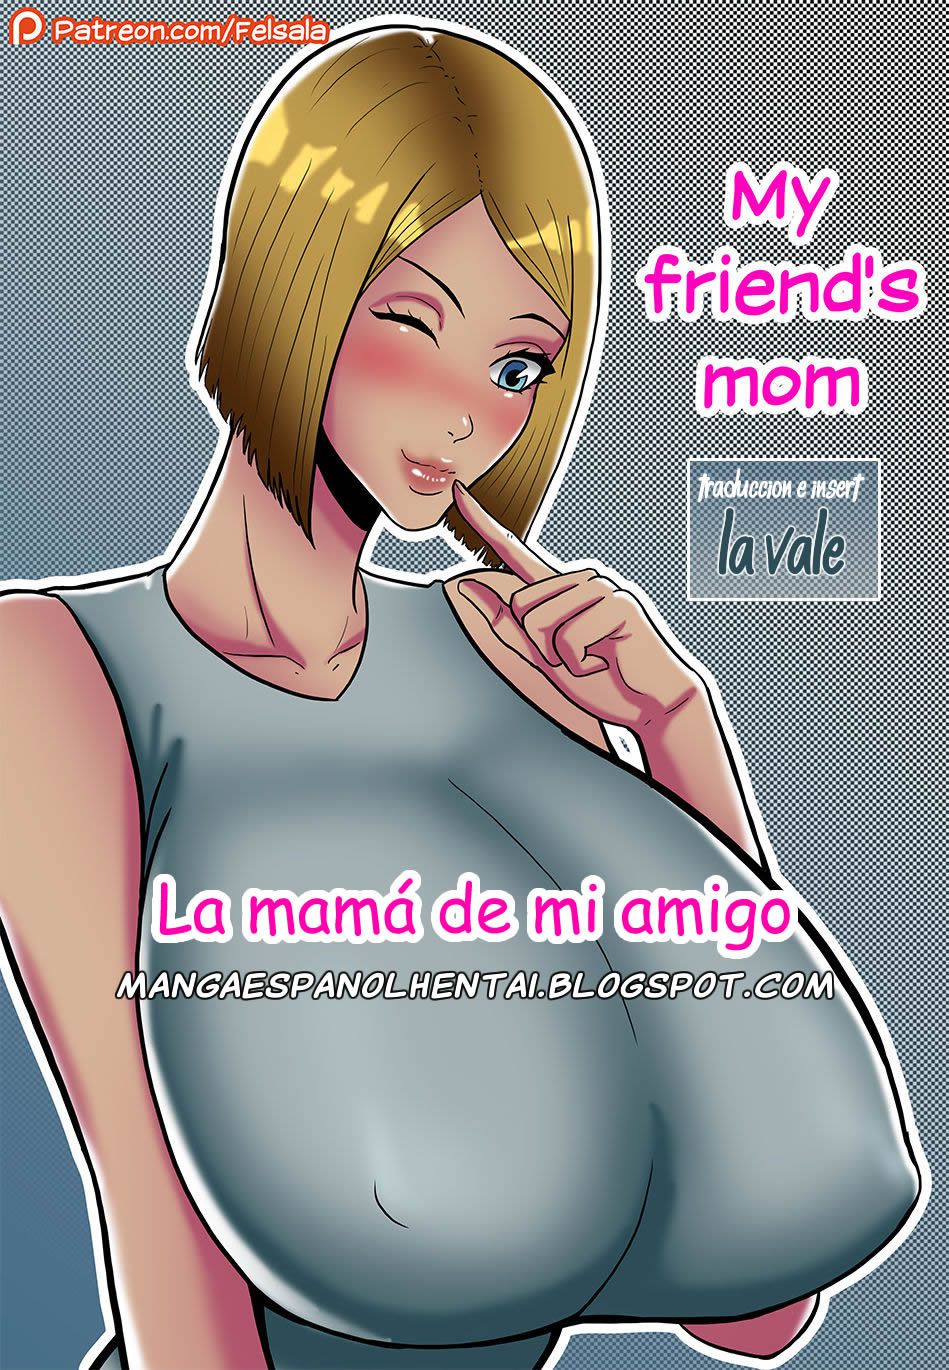 [Felsala] My friend's mom - La mama de mi amigo [Spanish] [Ongoing] 1